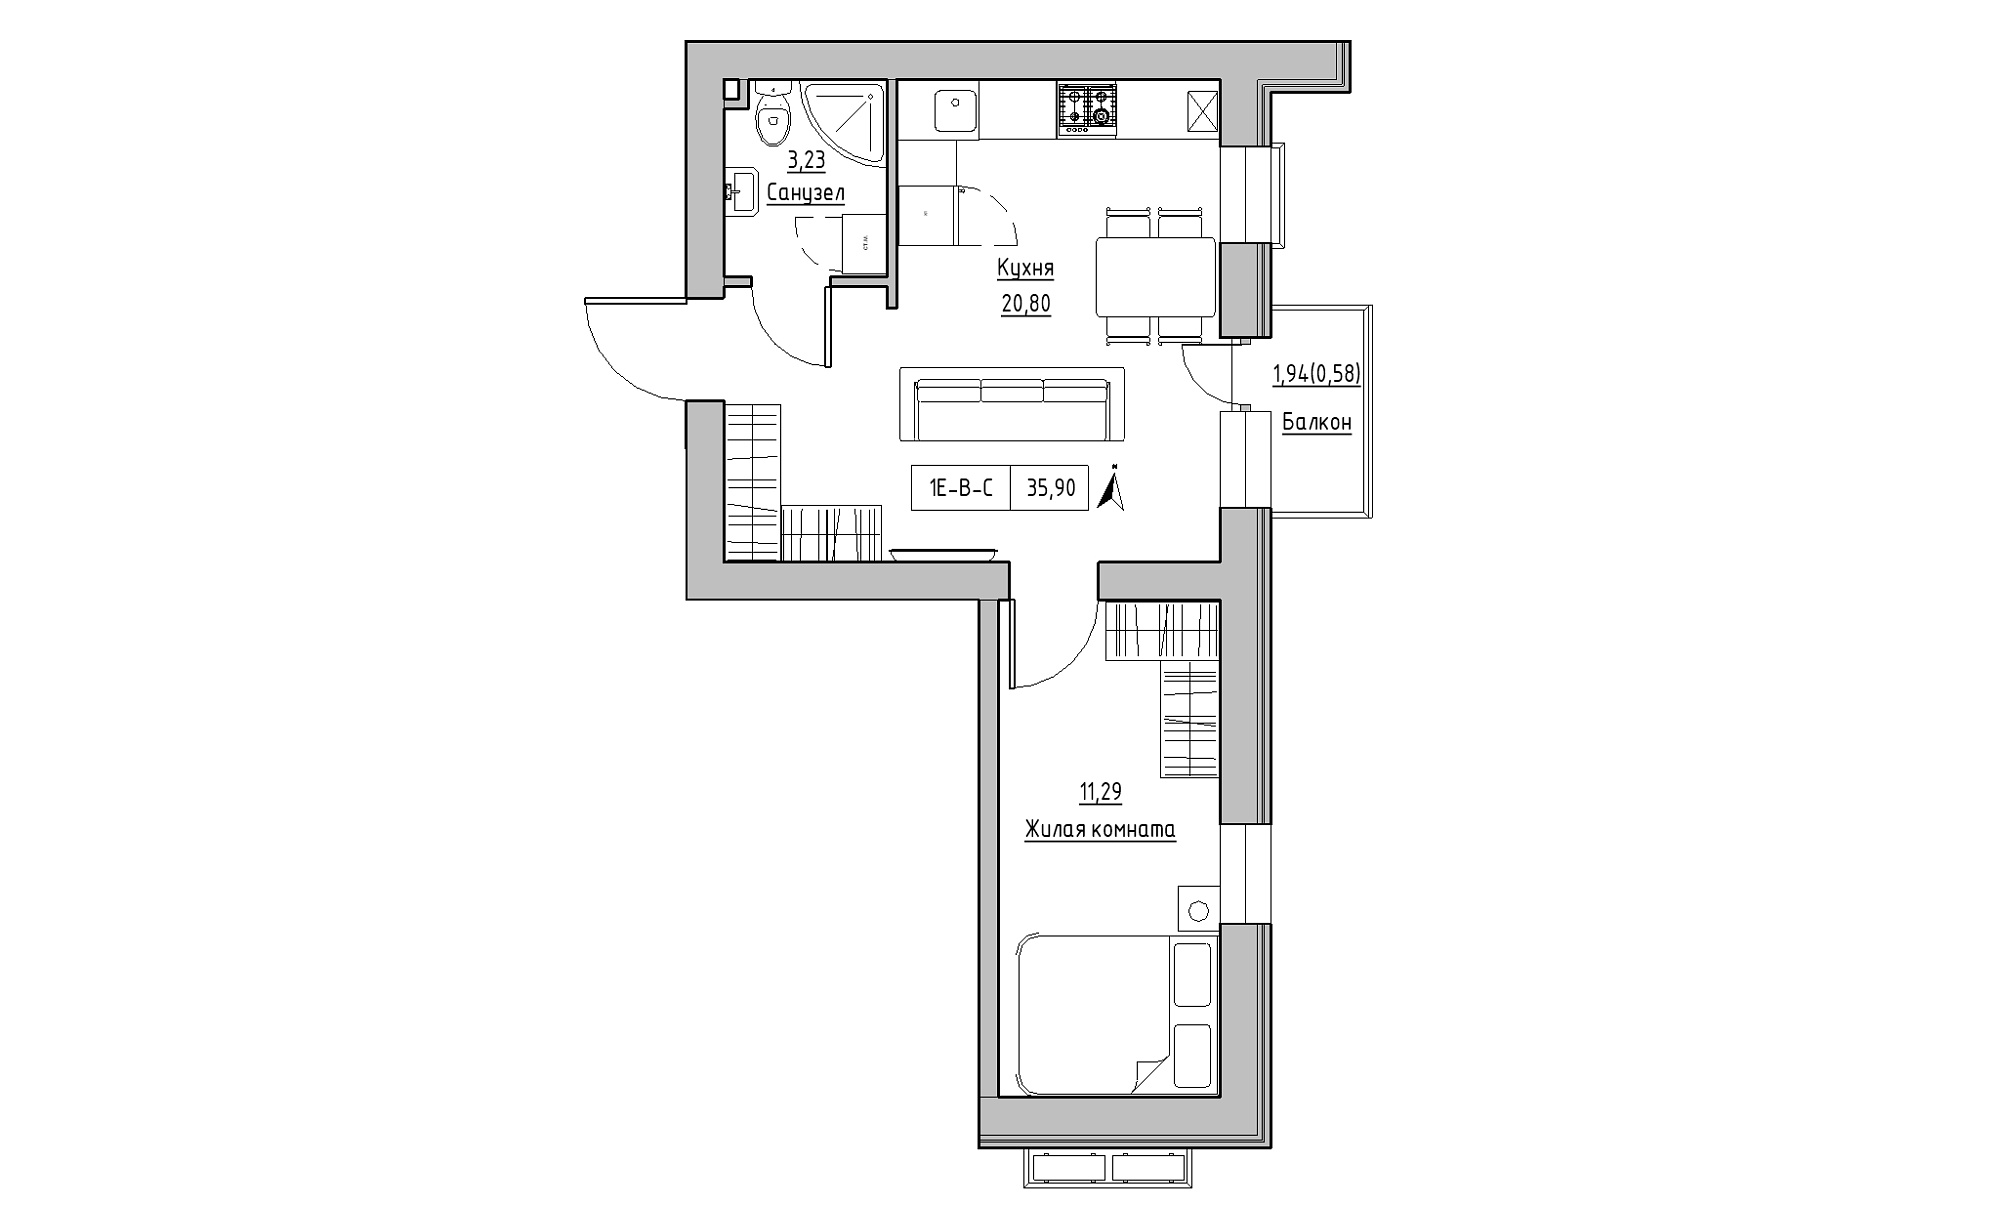 Planning 1-rm flats area 35.9m2, KS-023-03/0008.